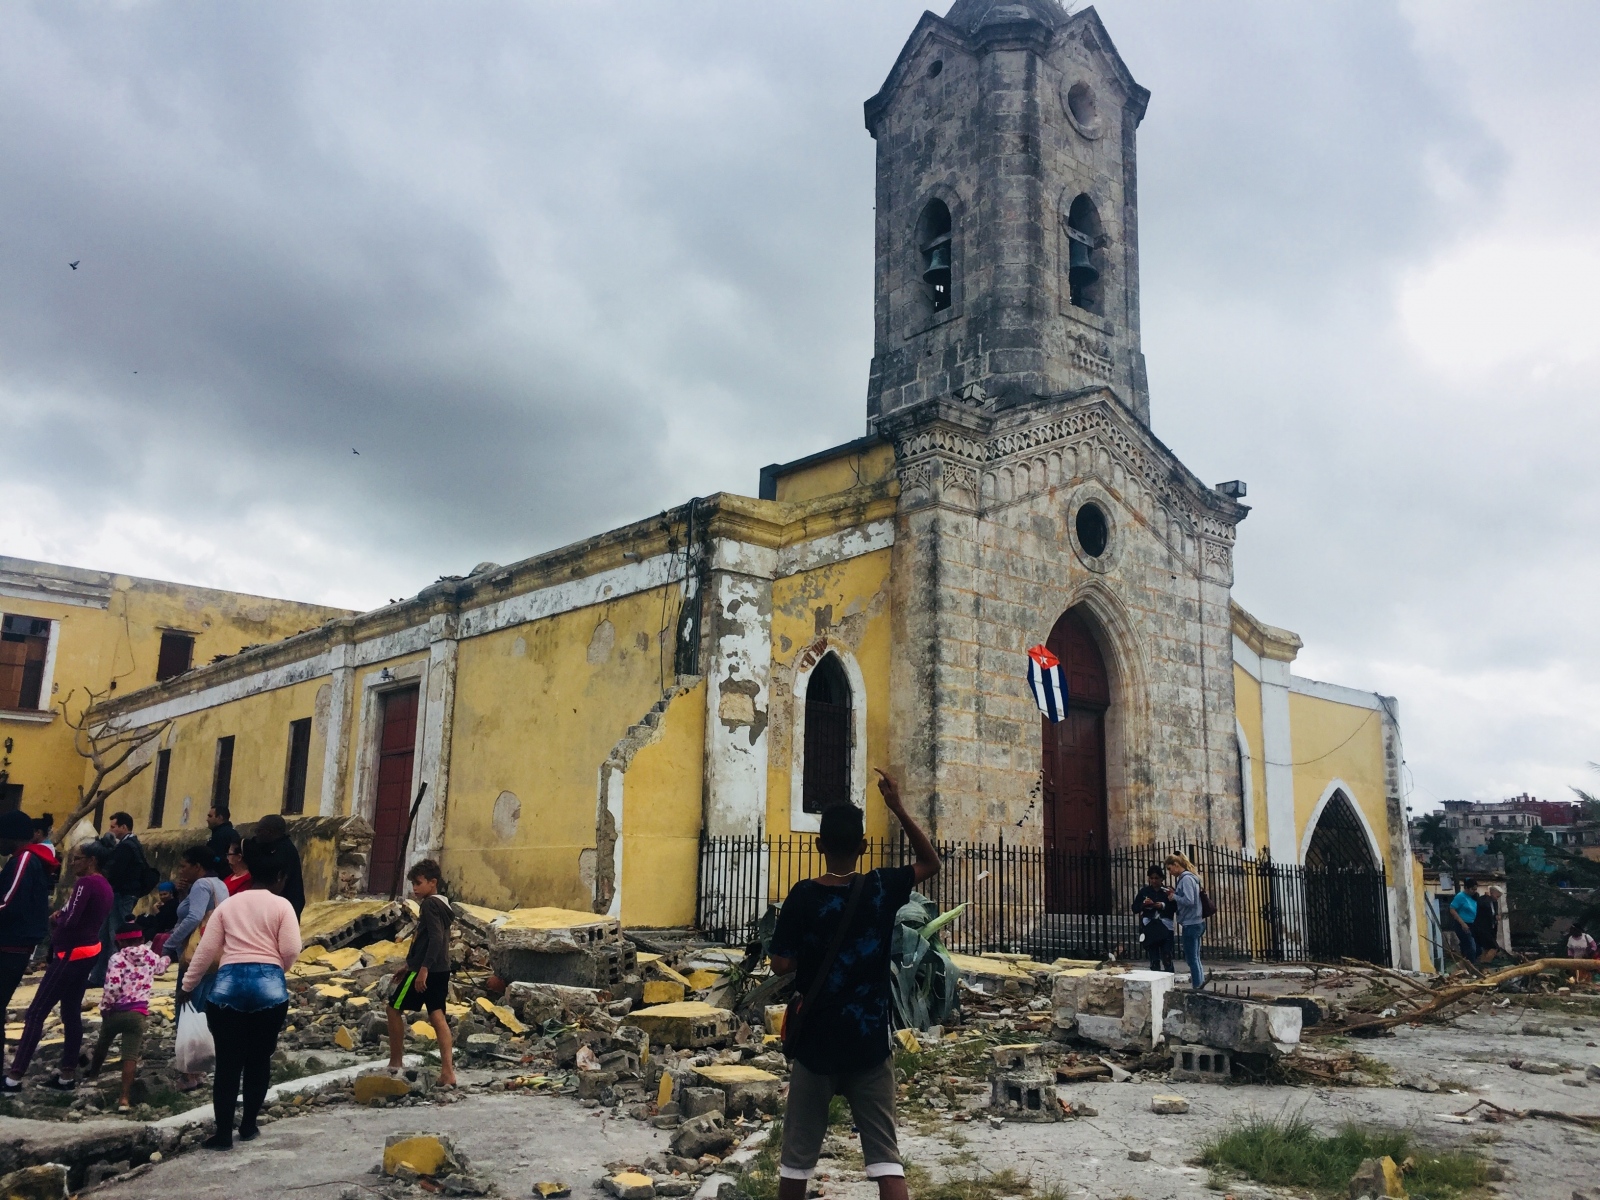 2nd Tornado in Havana in 500 years